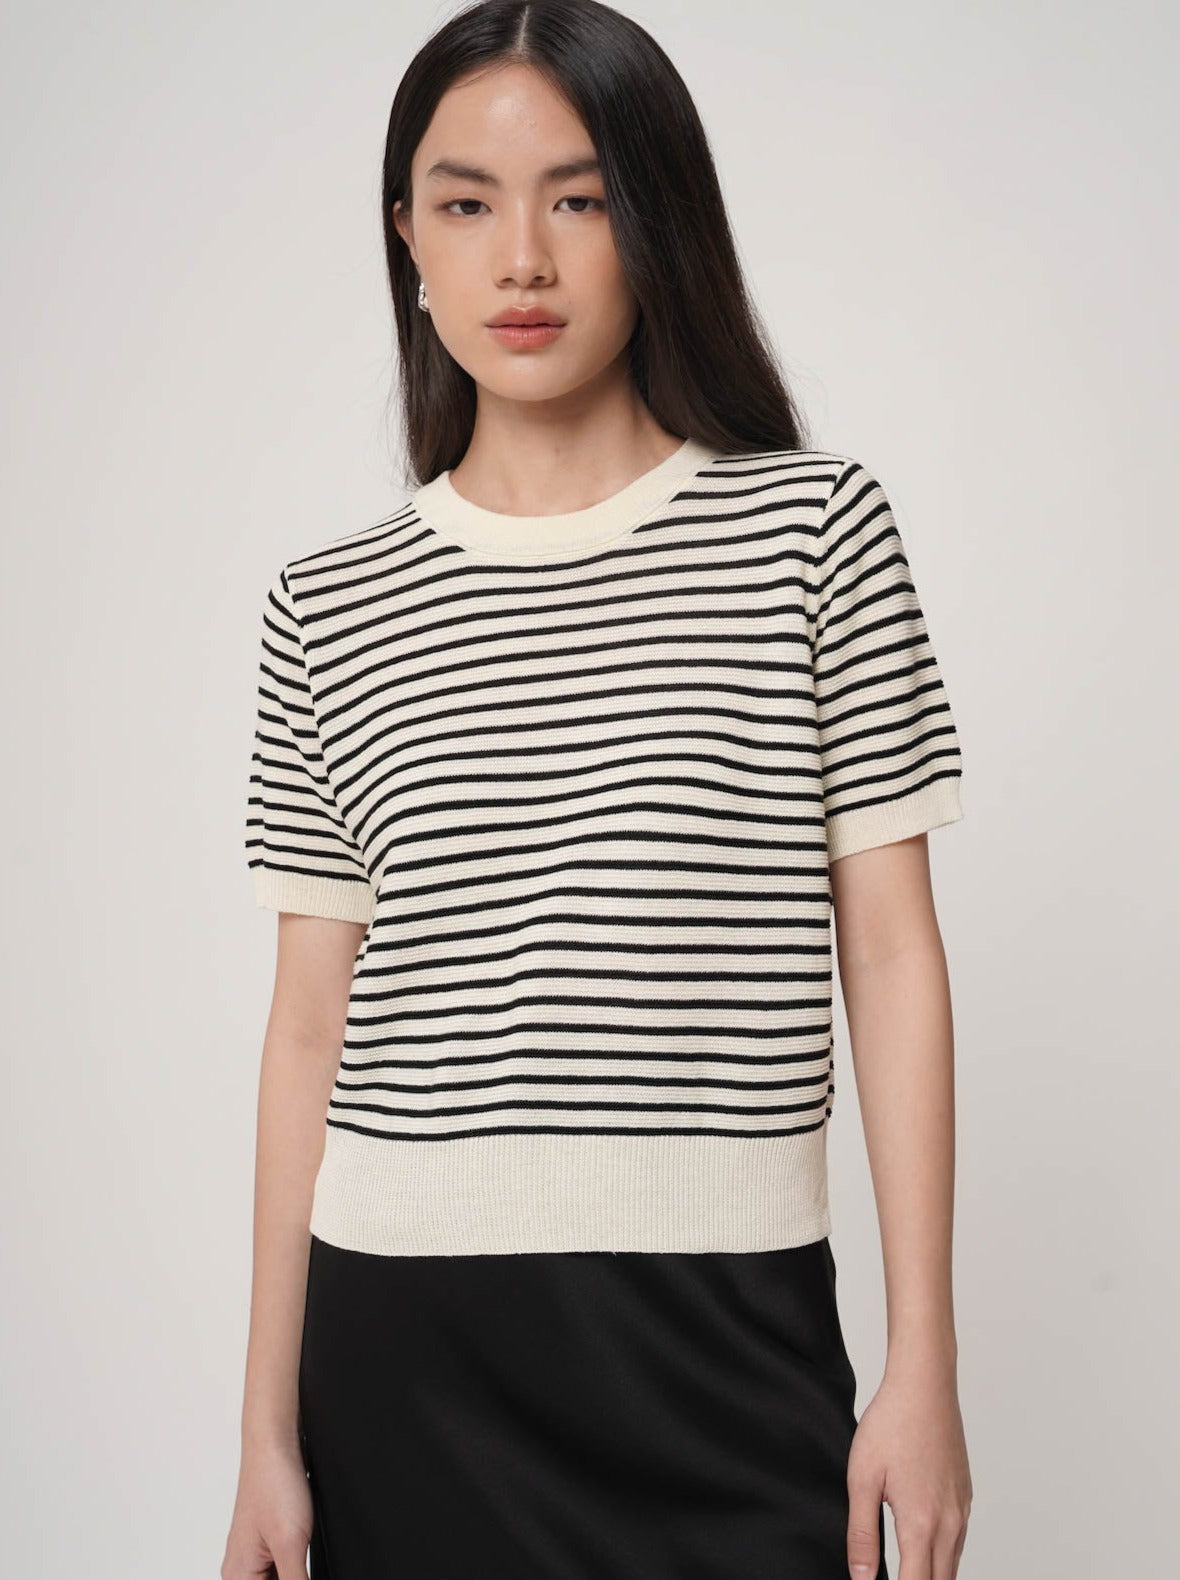 Hyori Top In White Stripes